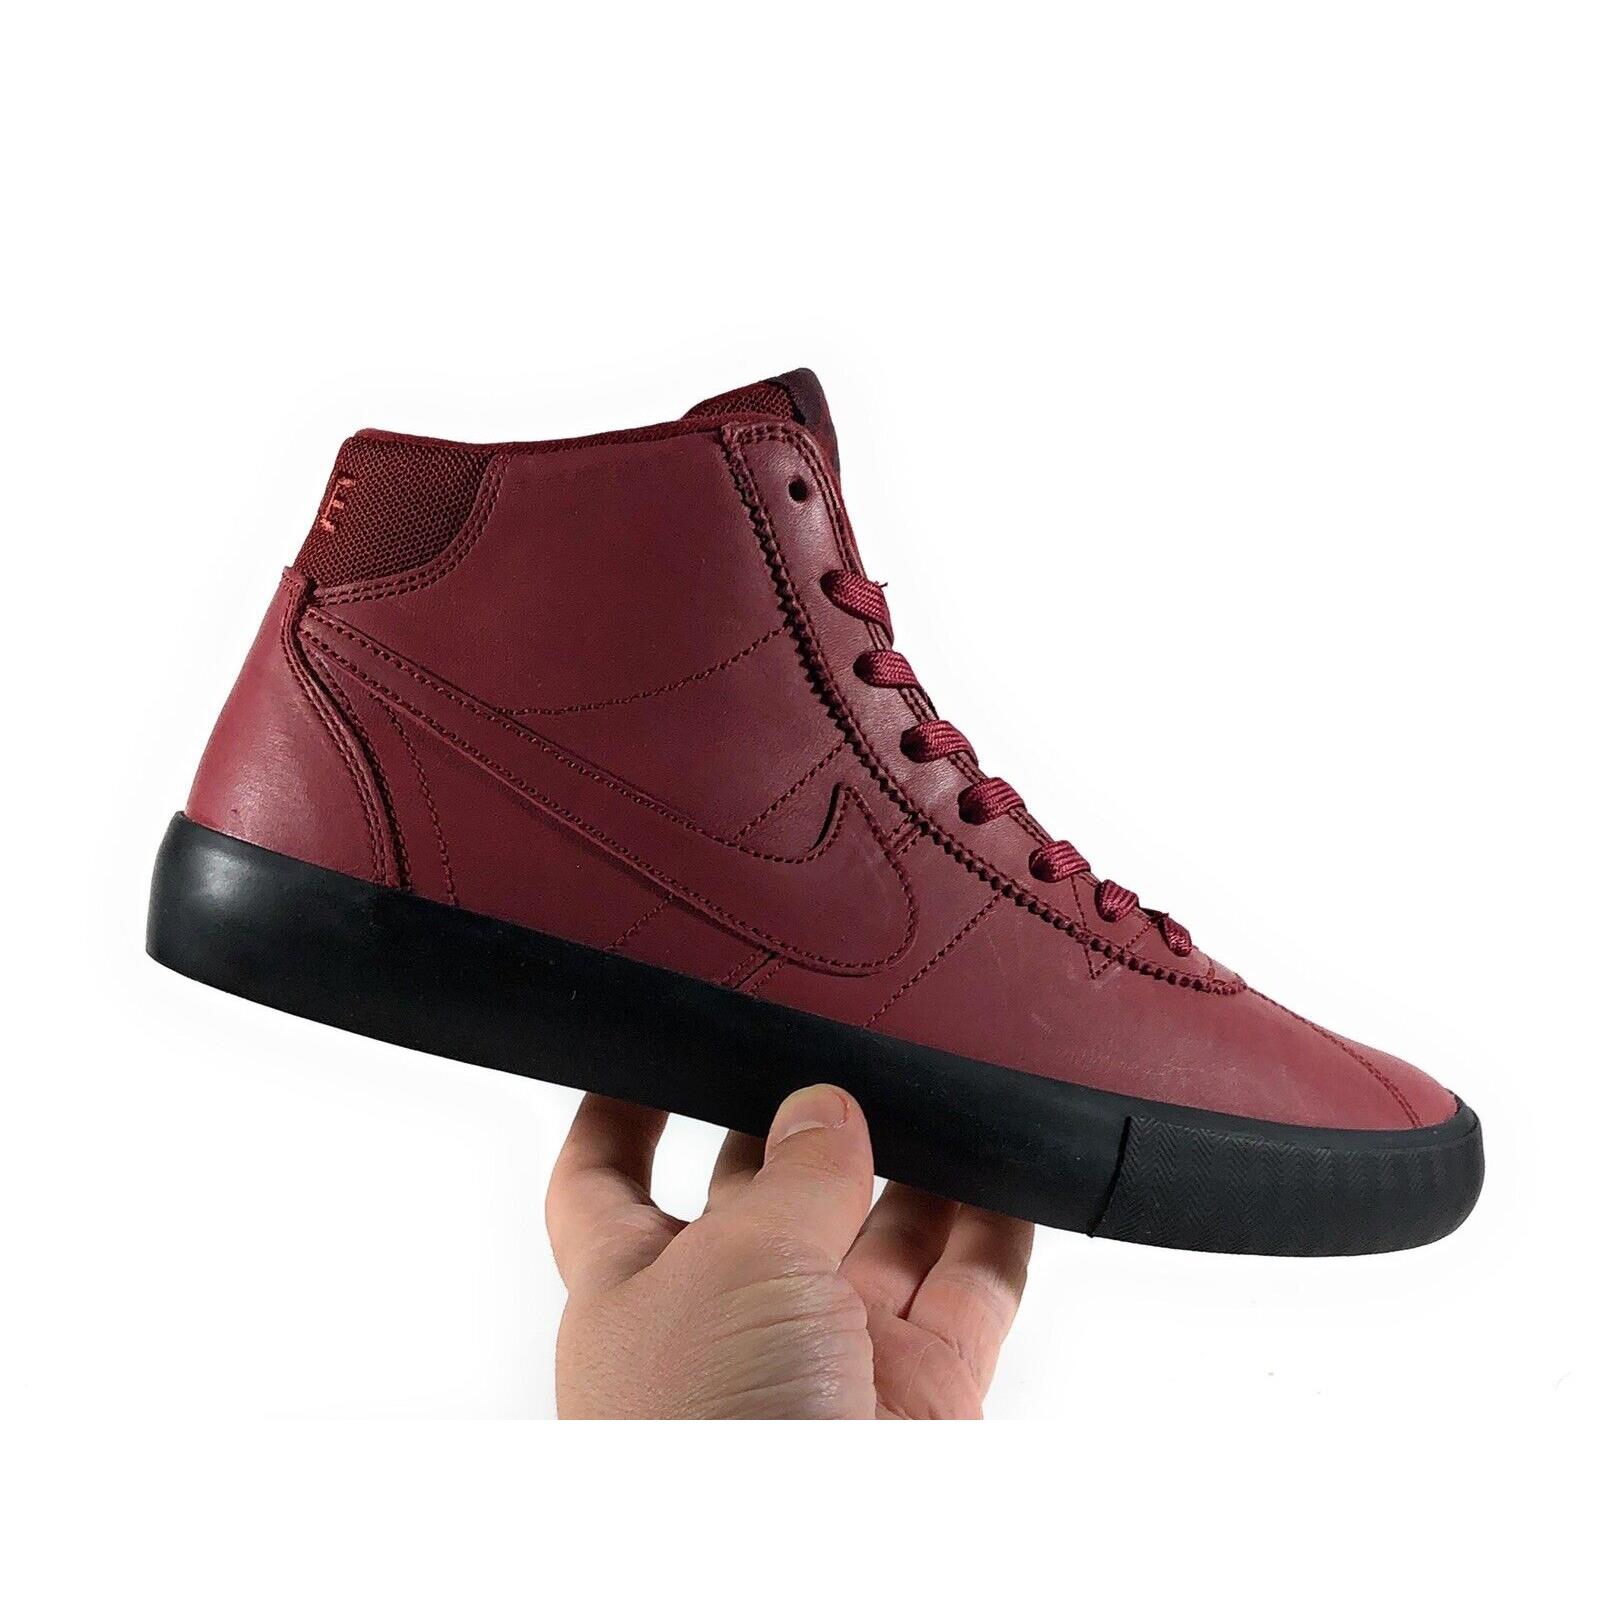 Nike shoes Bruin - Team Red, Night Maroon, Black , Team Red / Night Maroon / Black Manufacturer 0